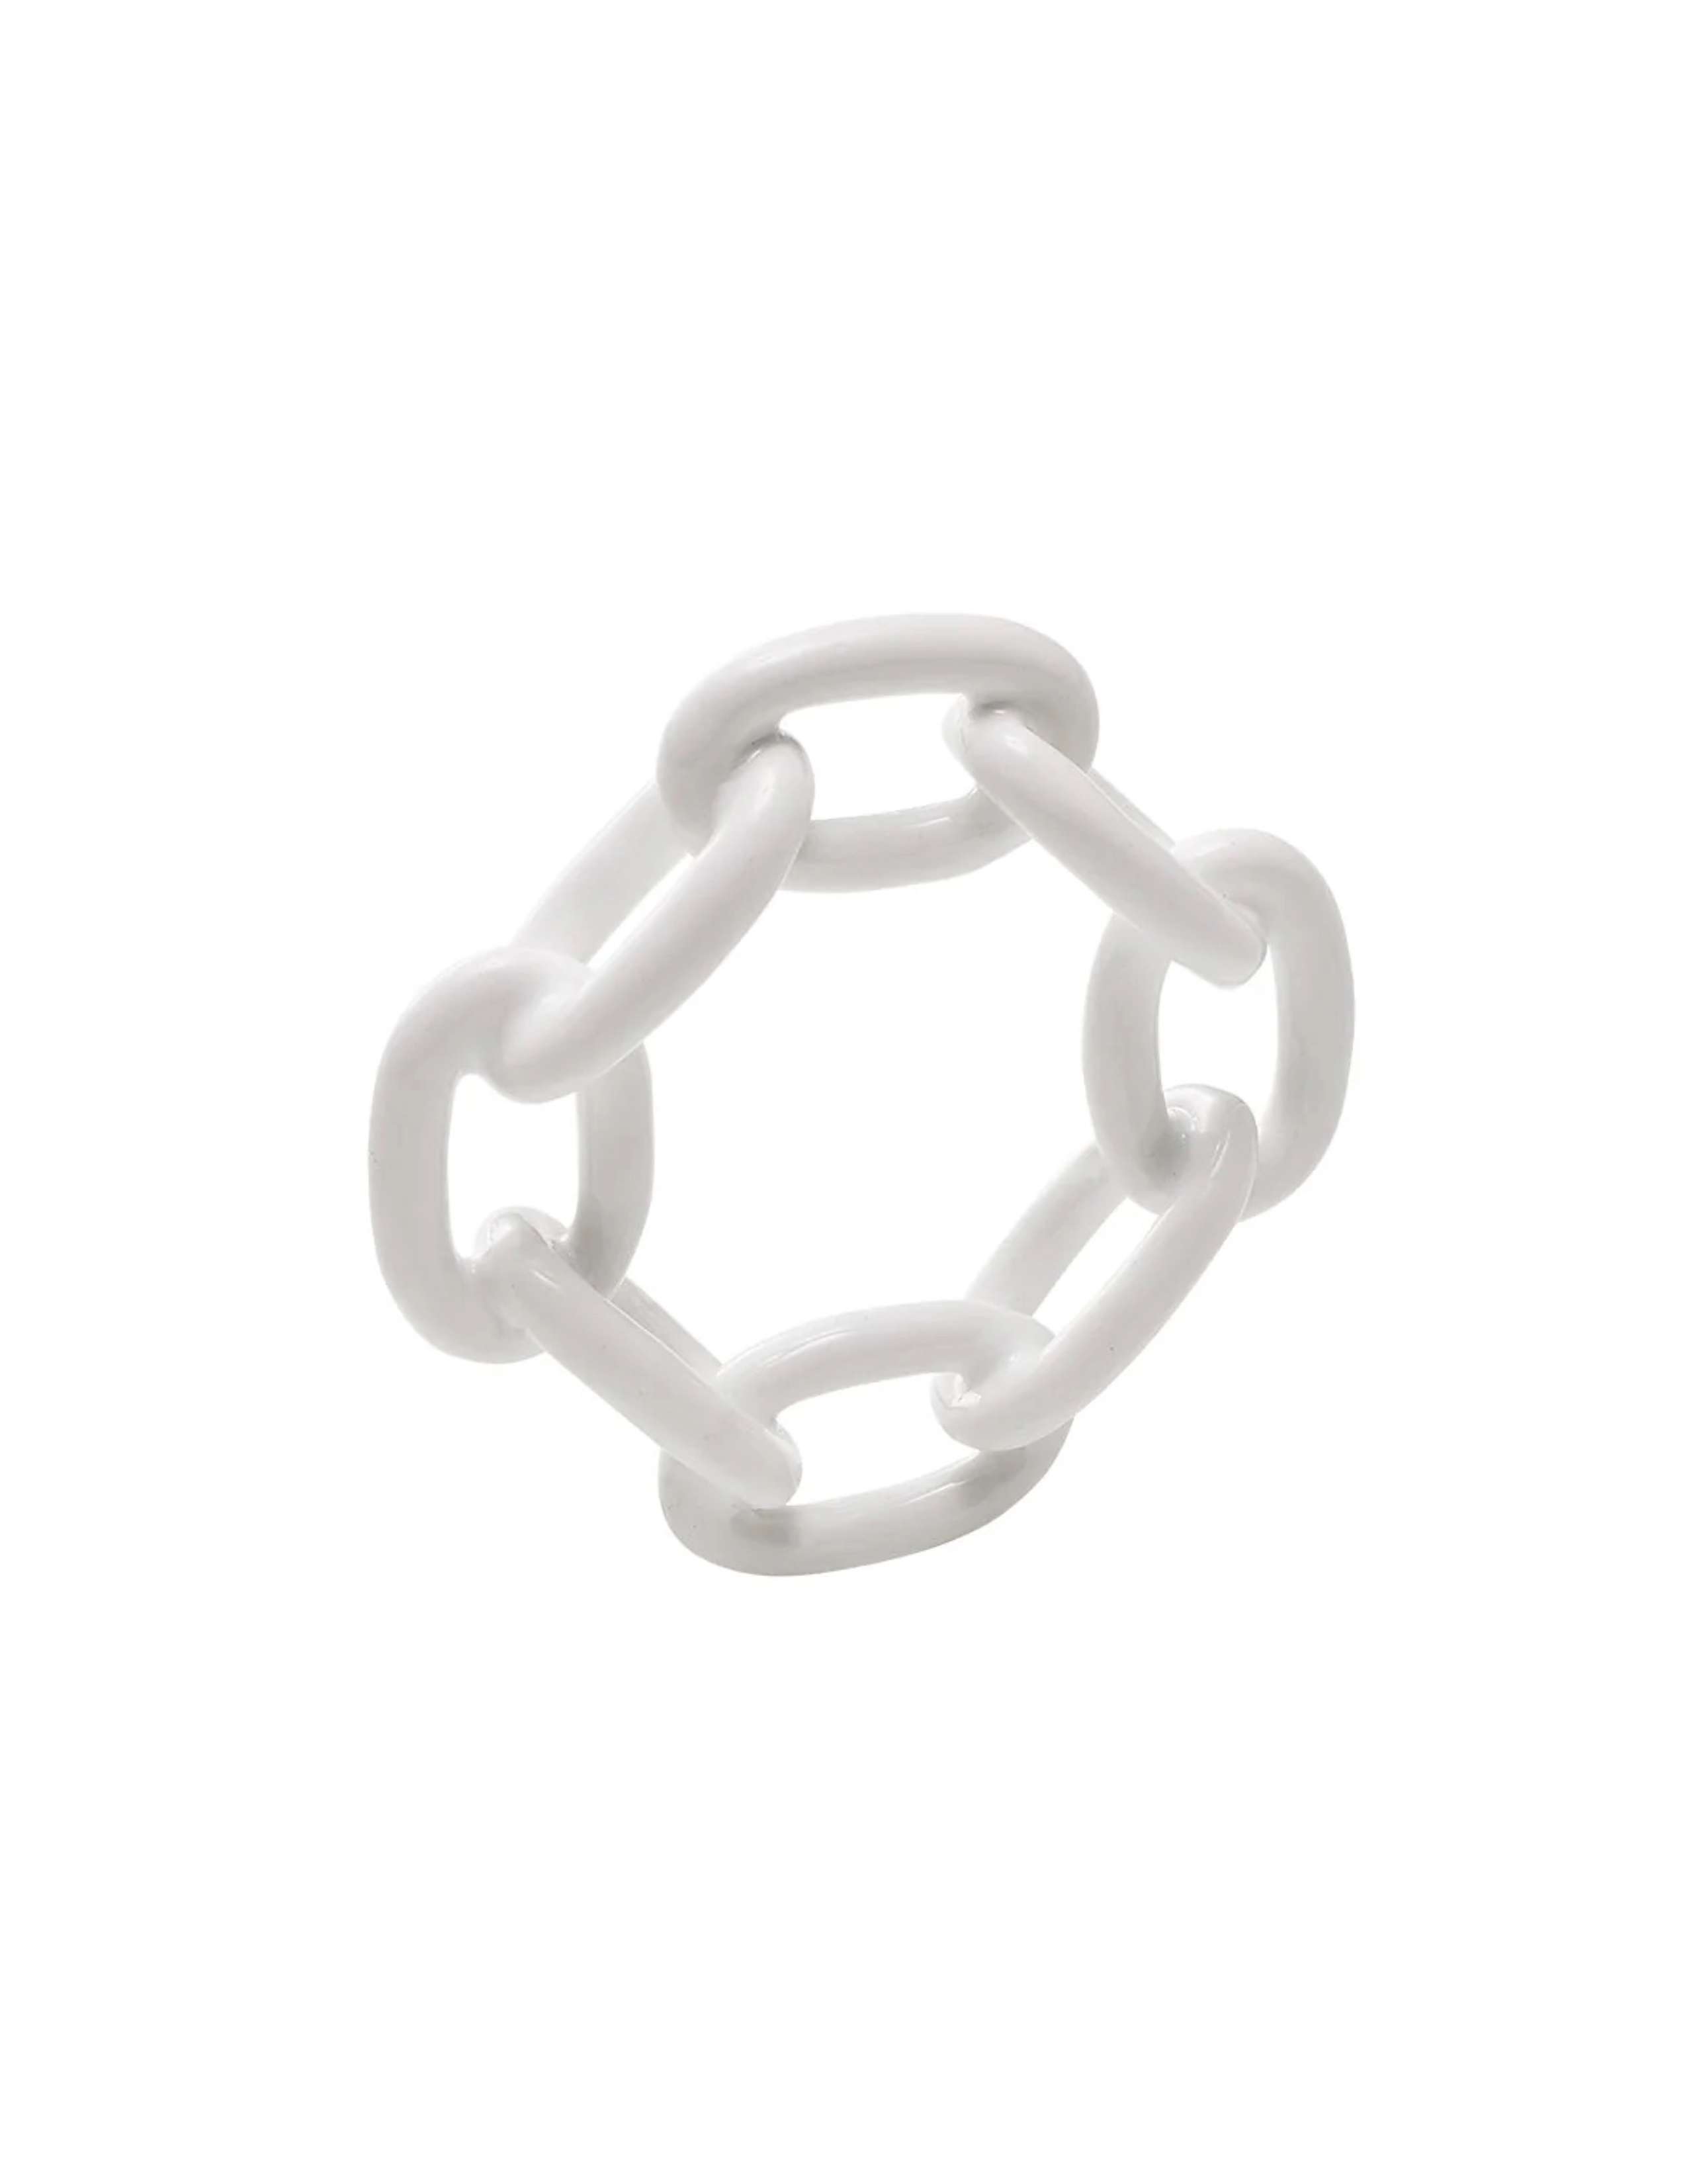 Enamel Chain Link Napkin Ring Set/4 - White